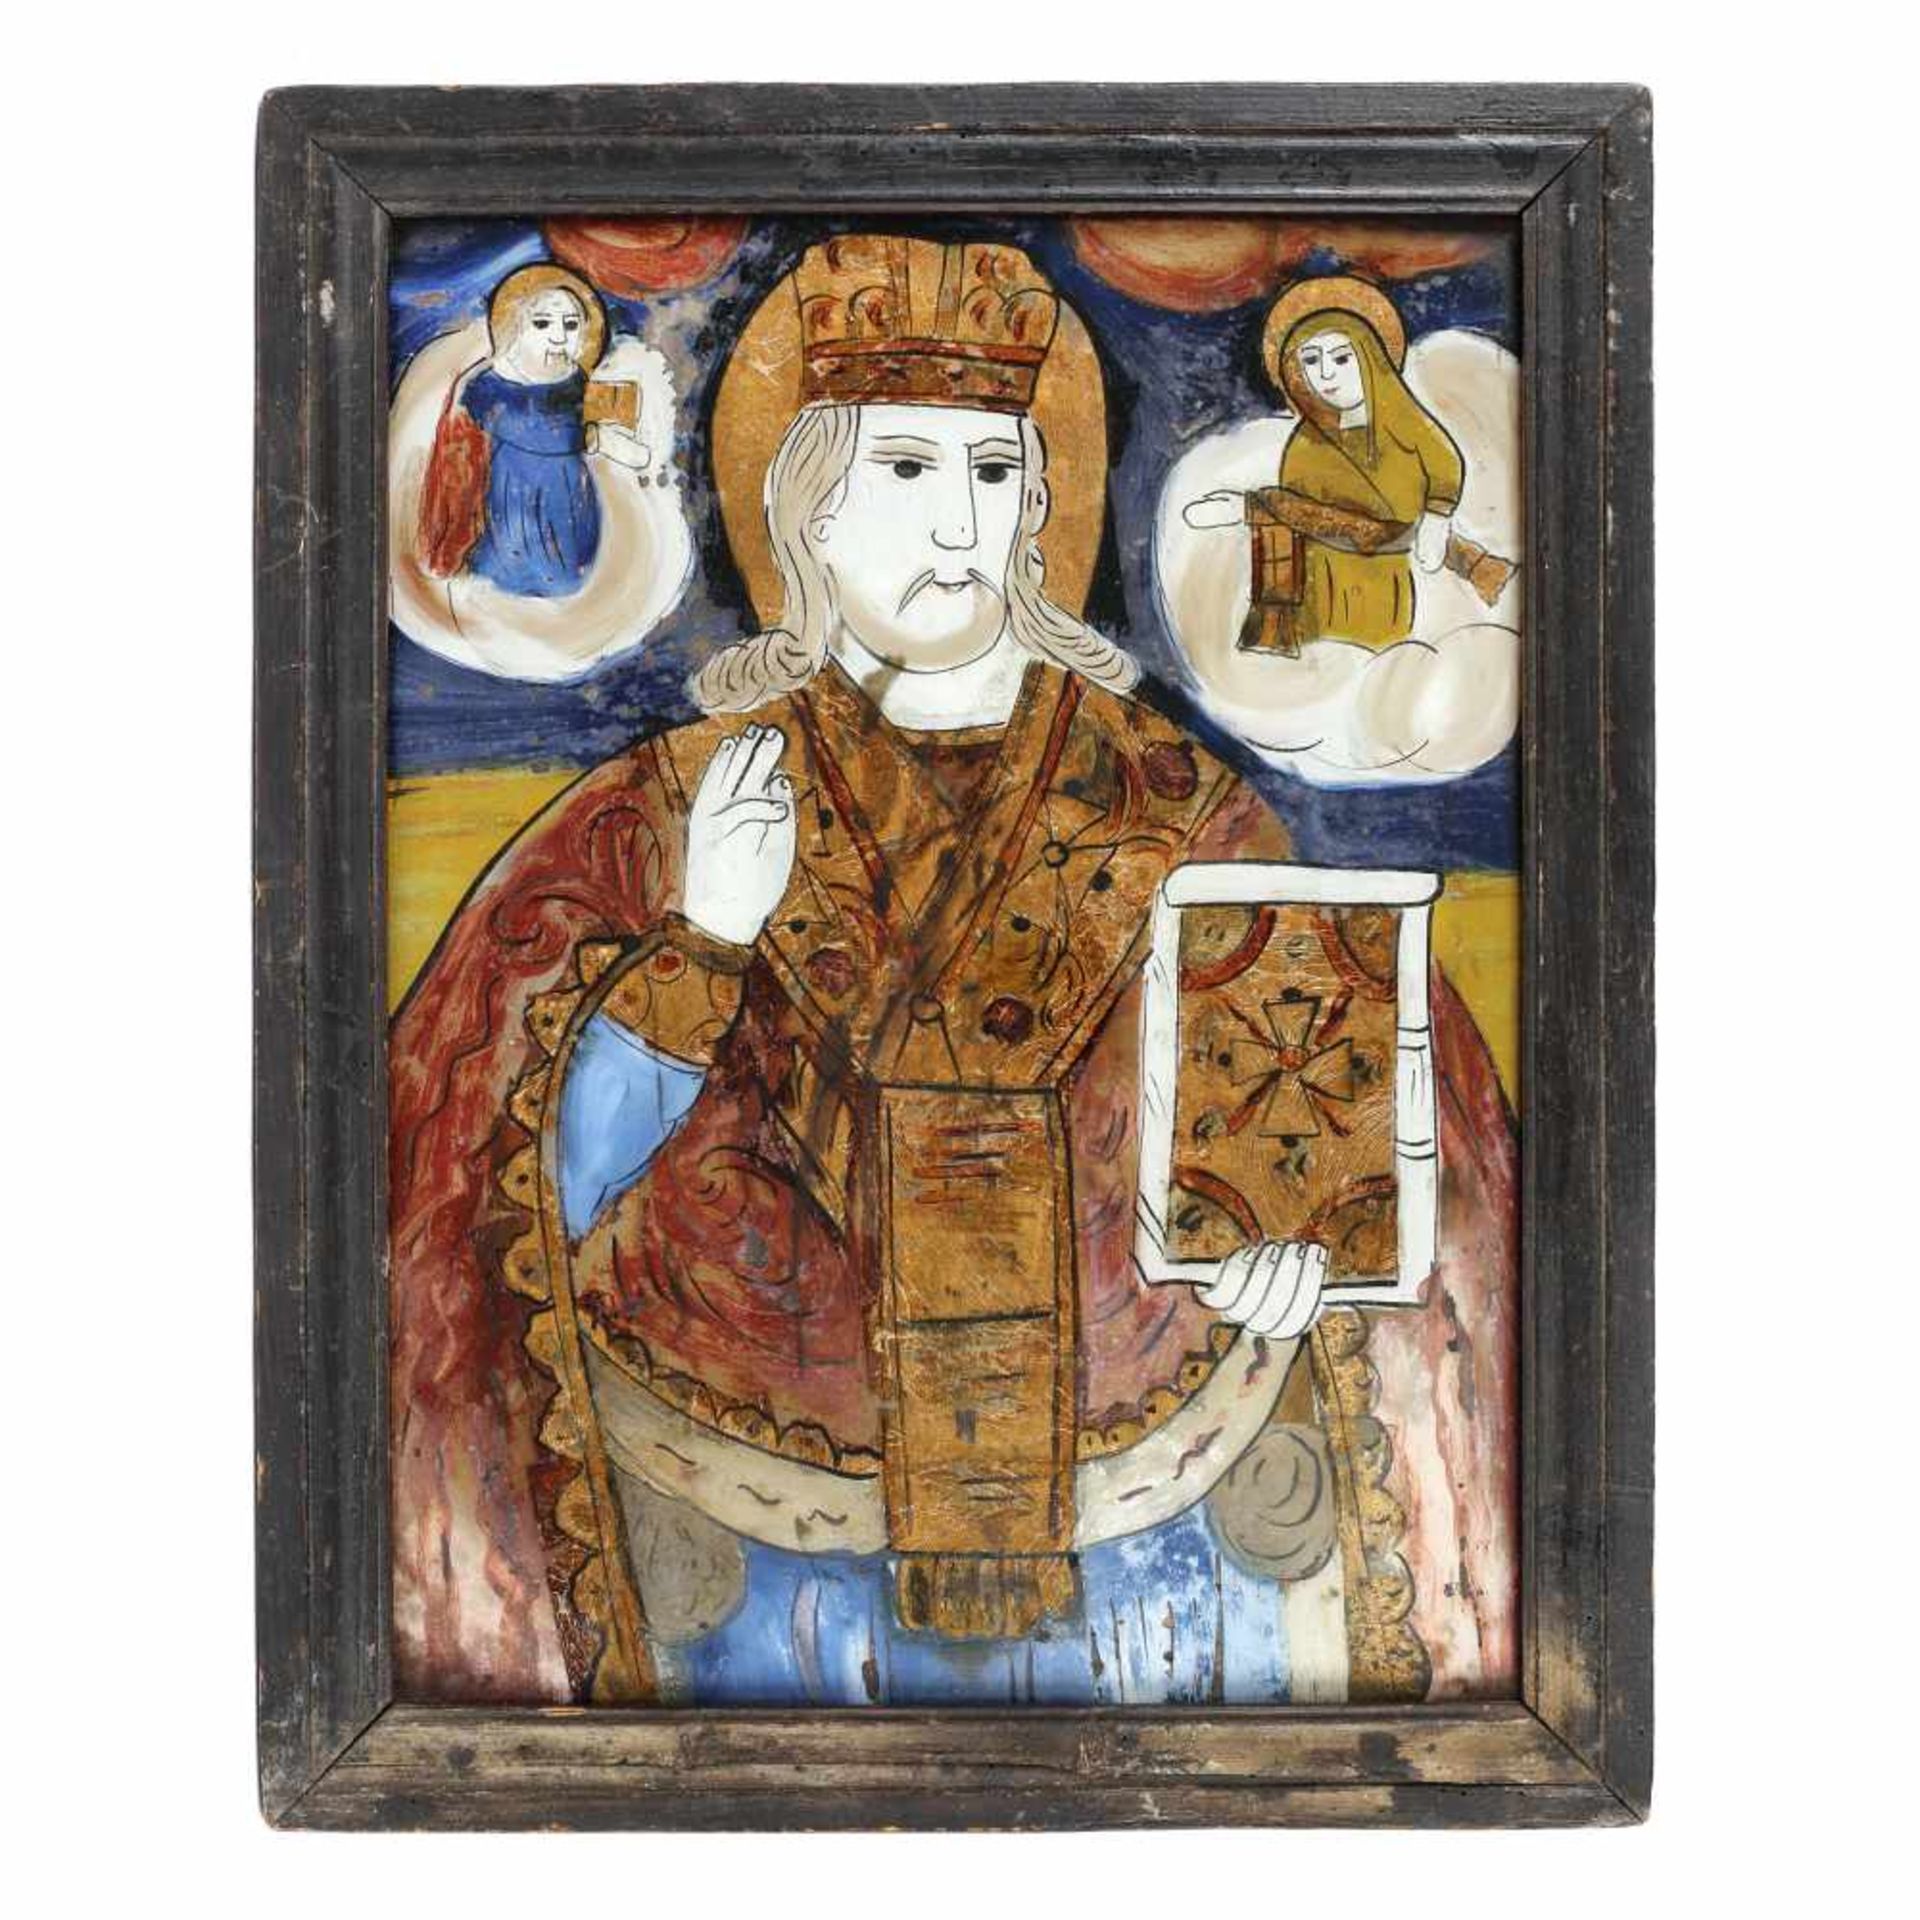 ”Saint Nicholas”, credited to painter Maria Prodan (Furnică), Maieri, Alba Iulia, late 19th century